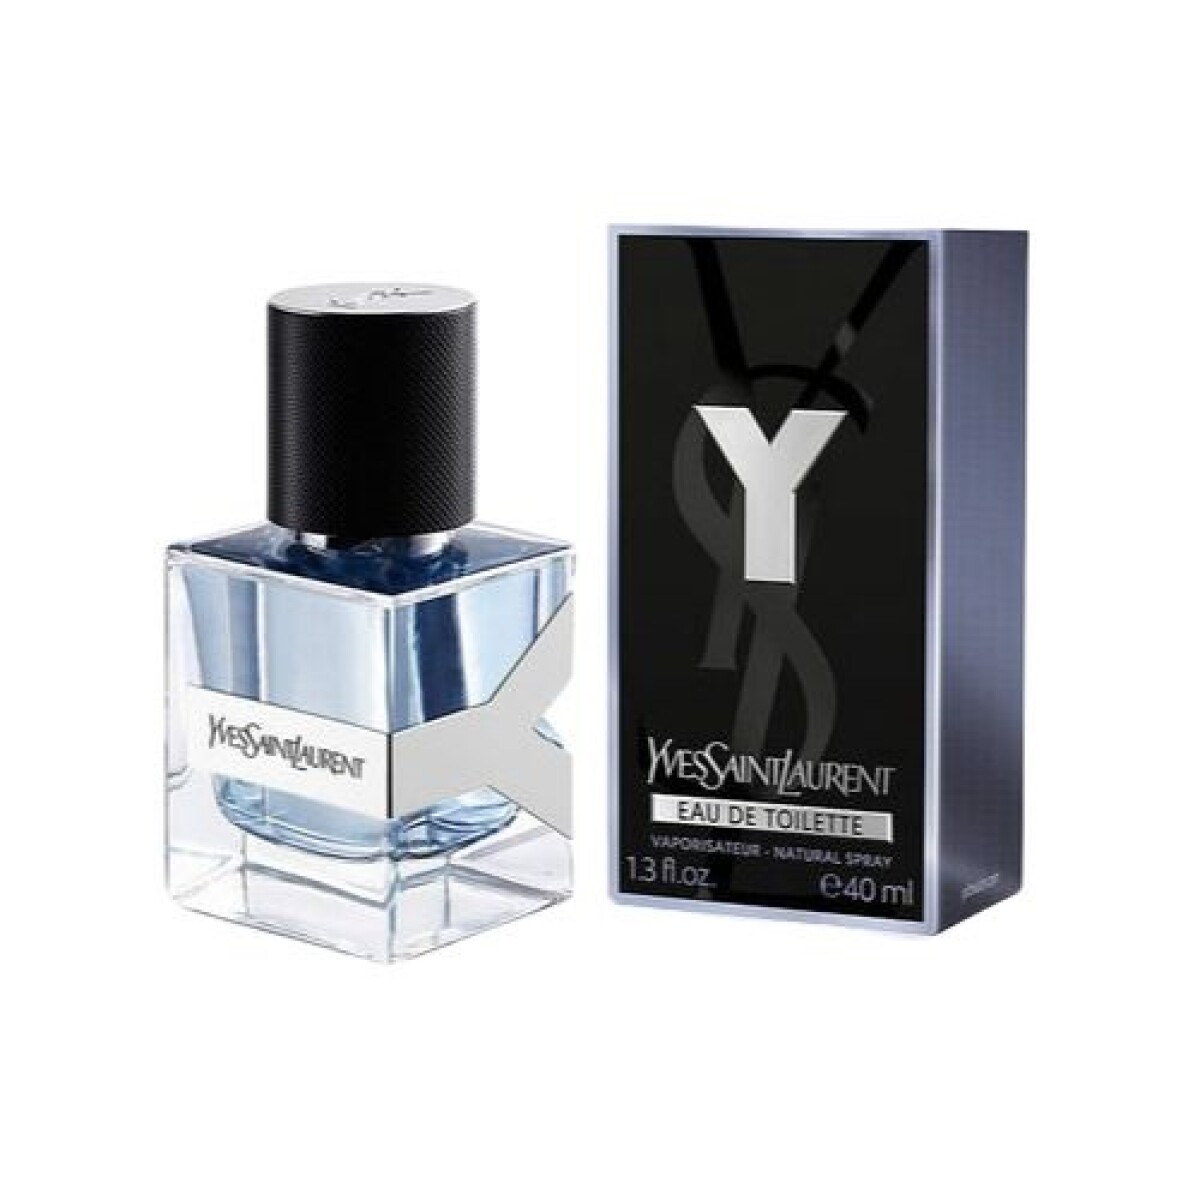 Perfume Yves Saint Laurent New Y Men Edt 40 Ml. 